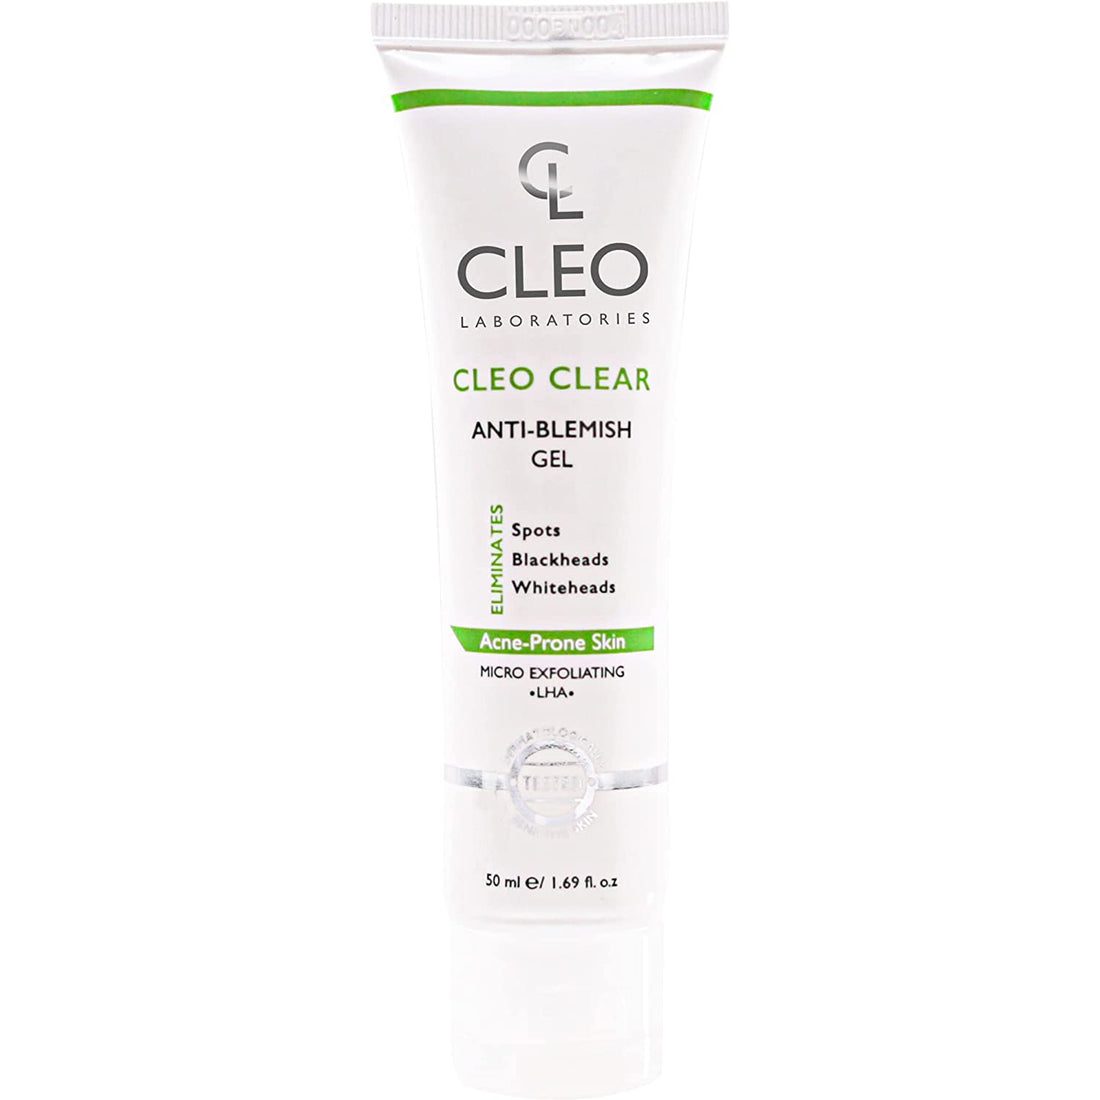 Cleo Laboratories Anti-Blemish Gel